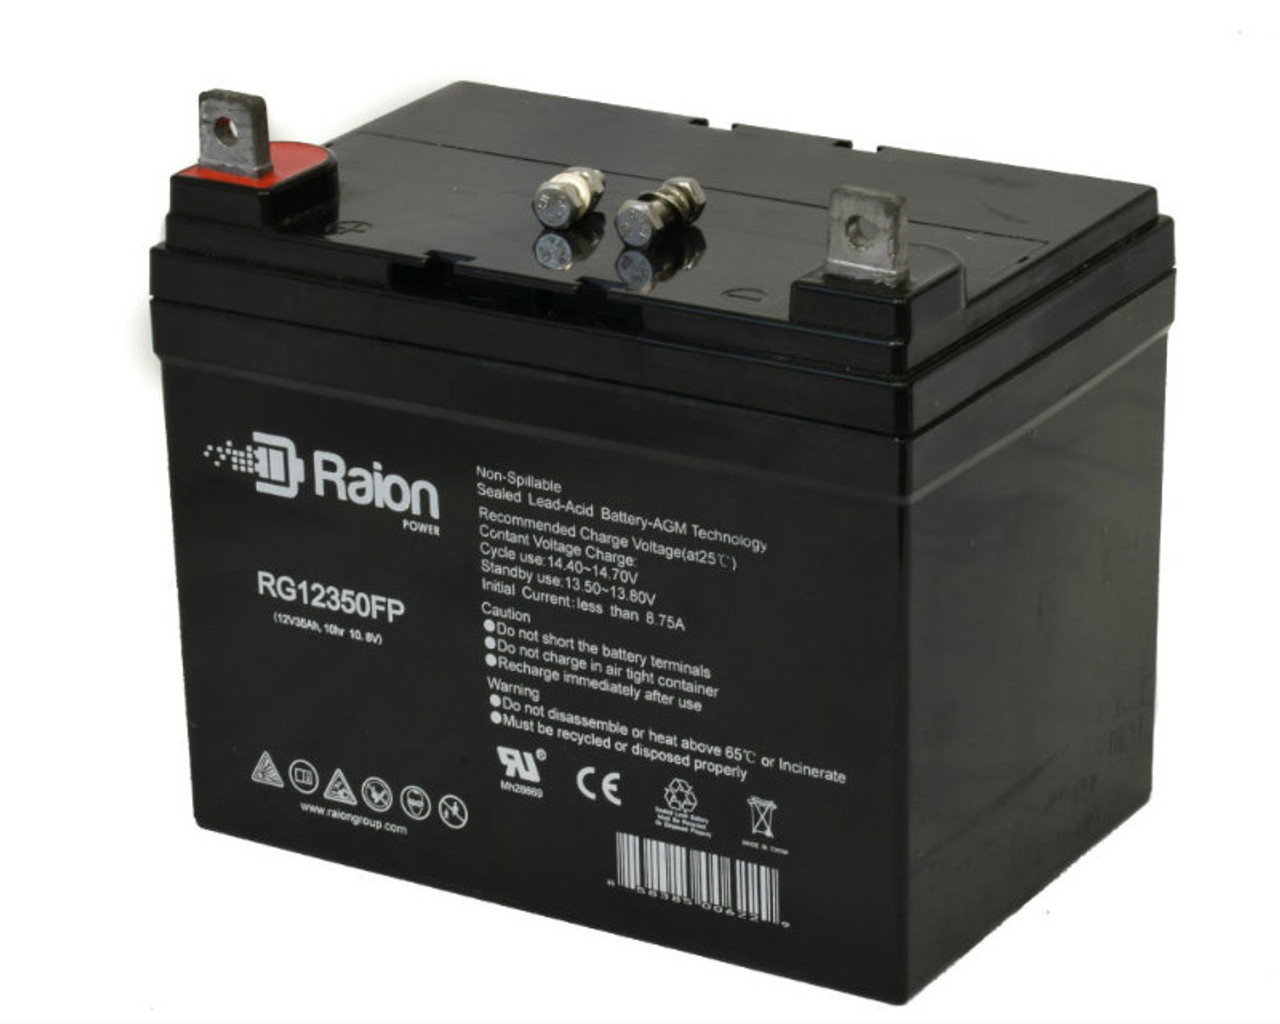 Raion Power Replacement 12V 35Ah Battery for John Deere STX38 - 1 Pack